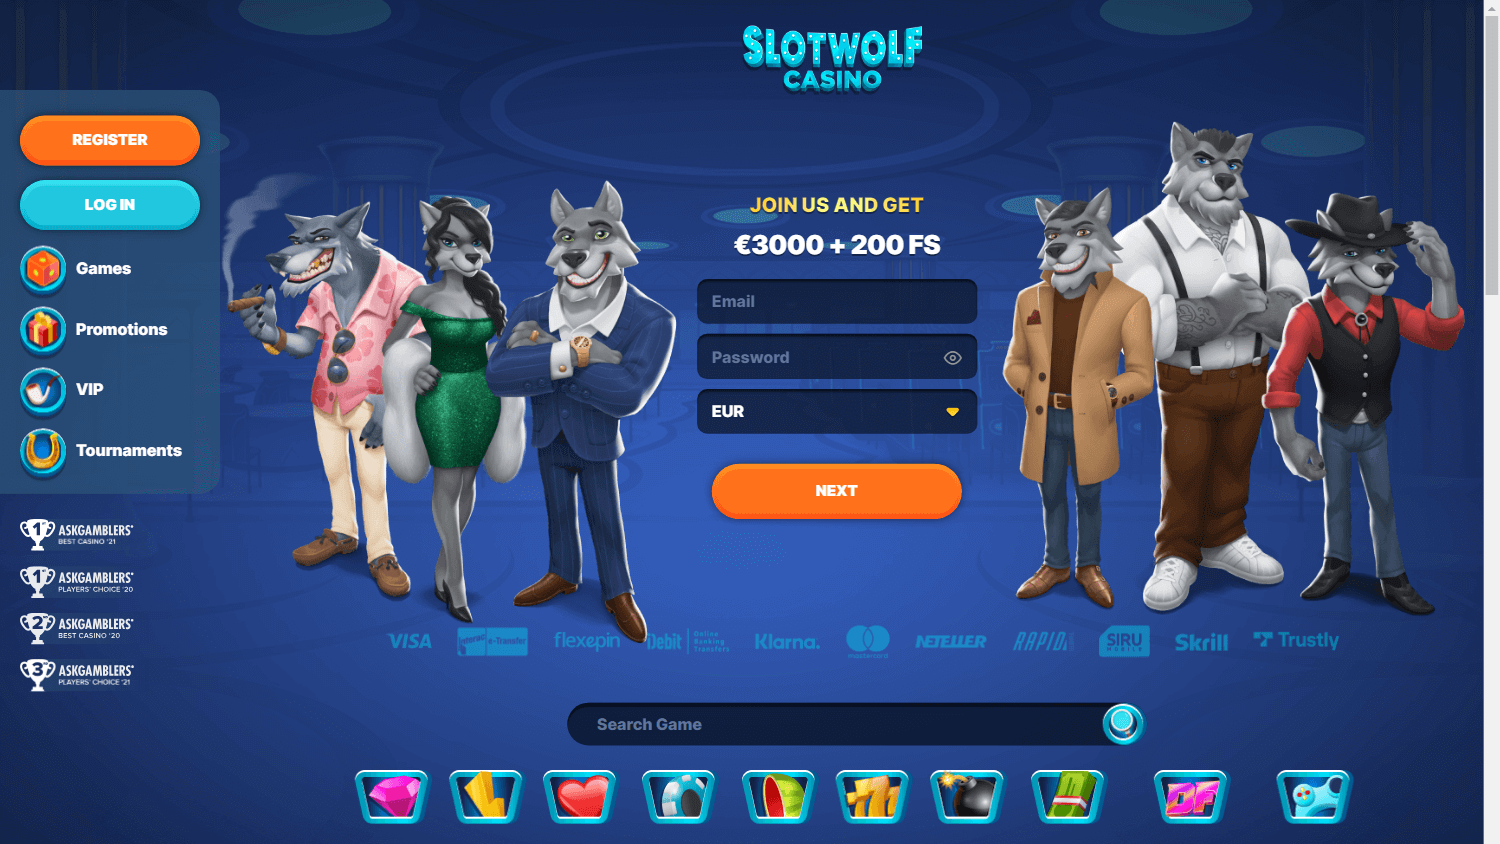 slot_wolf_casino_homepage_desktop